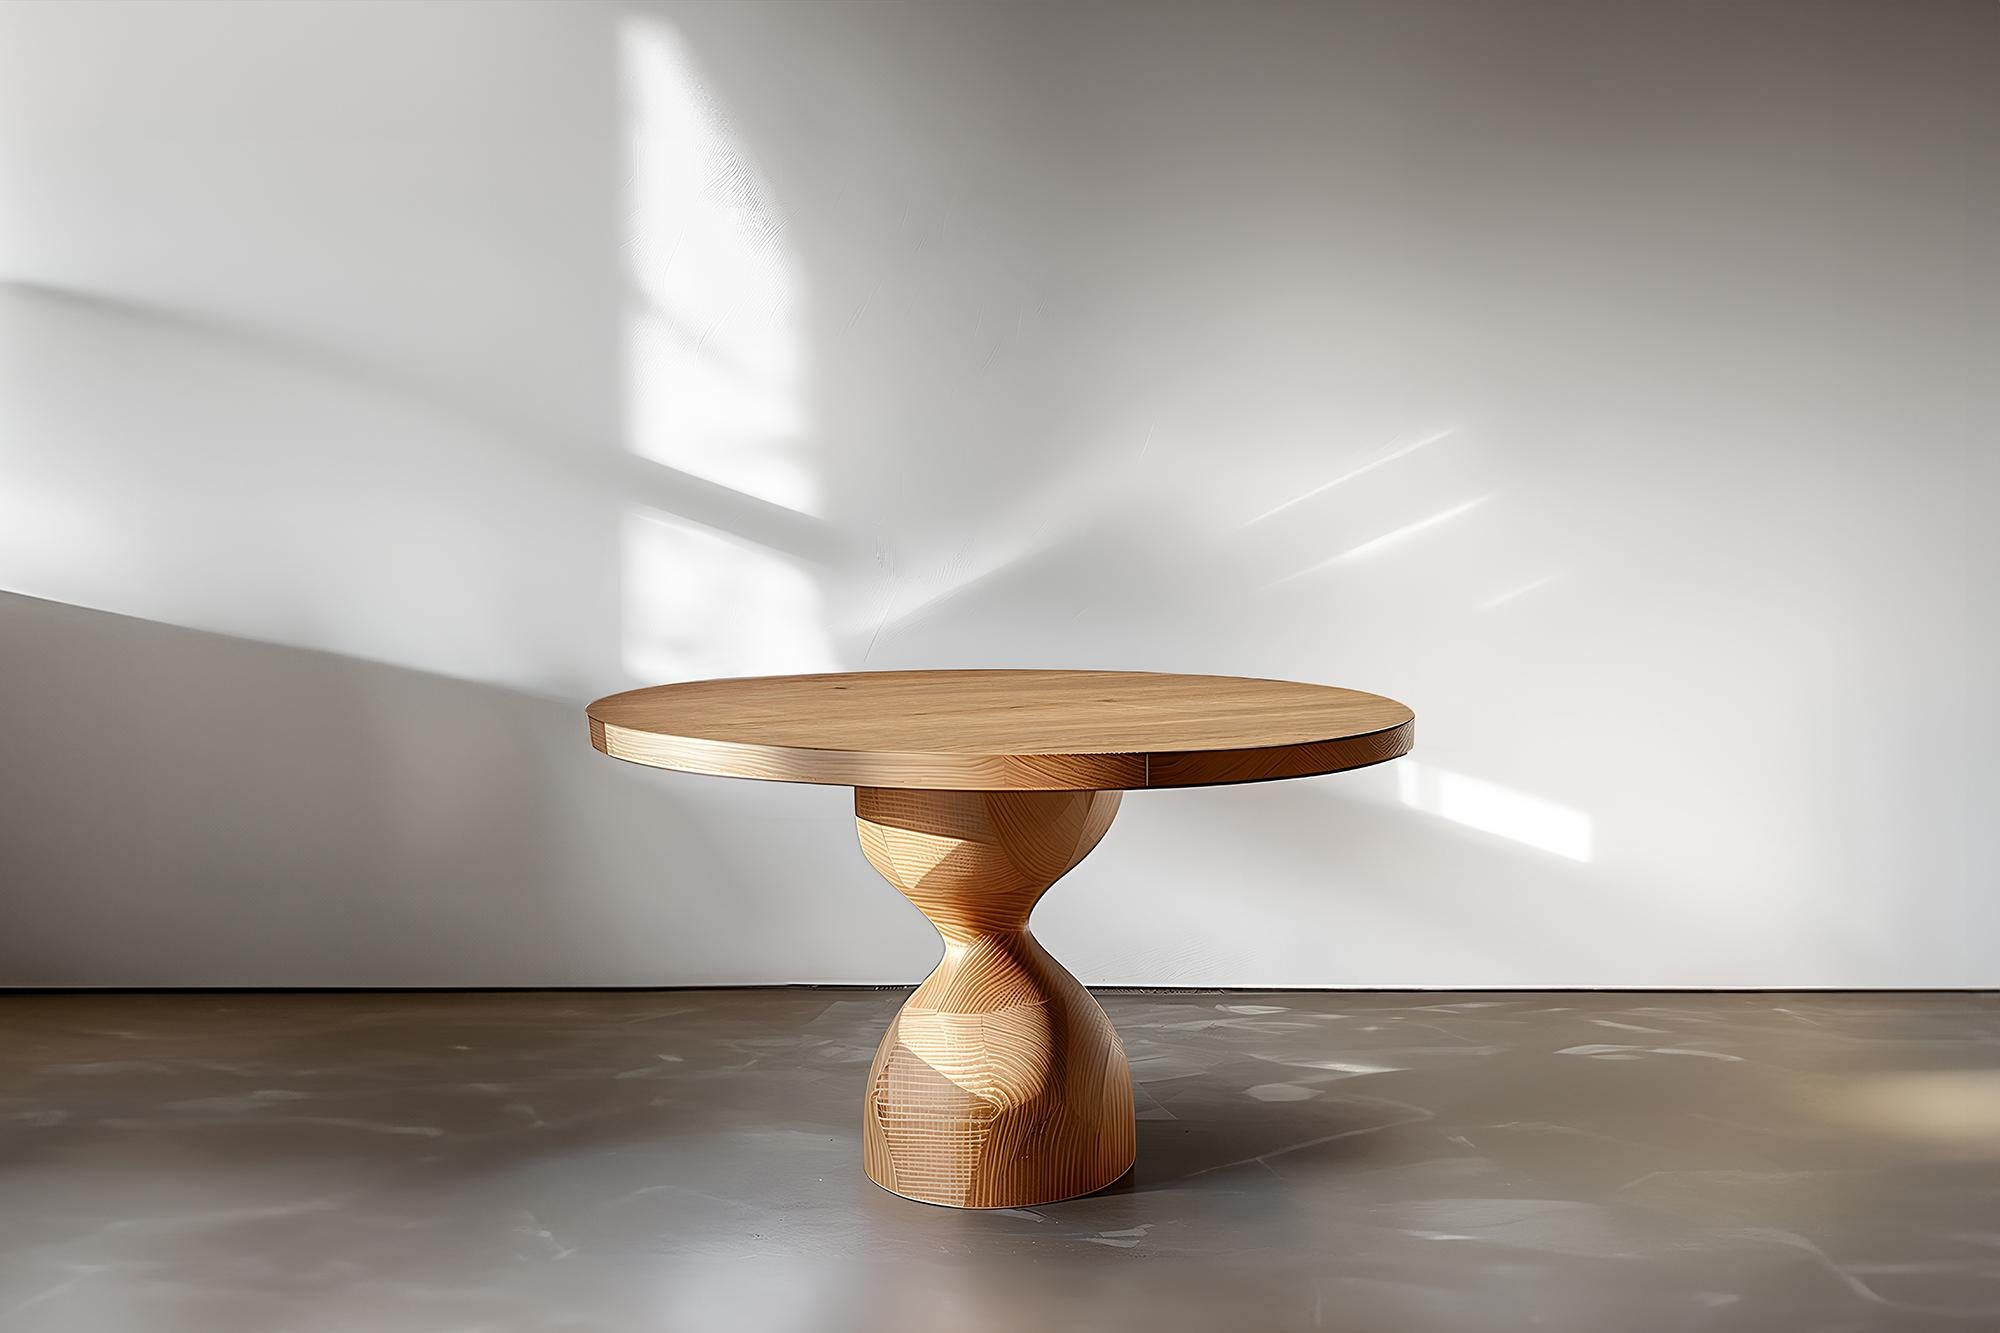 Sculptural Desks No04, Solid Wood Elegance by Socle & Joel Escalona

——

Introducing the 